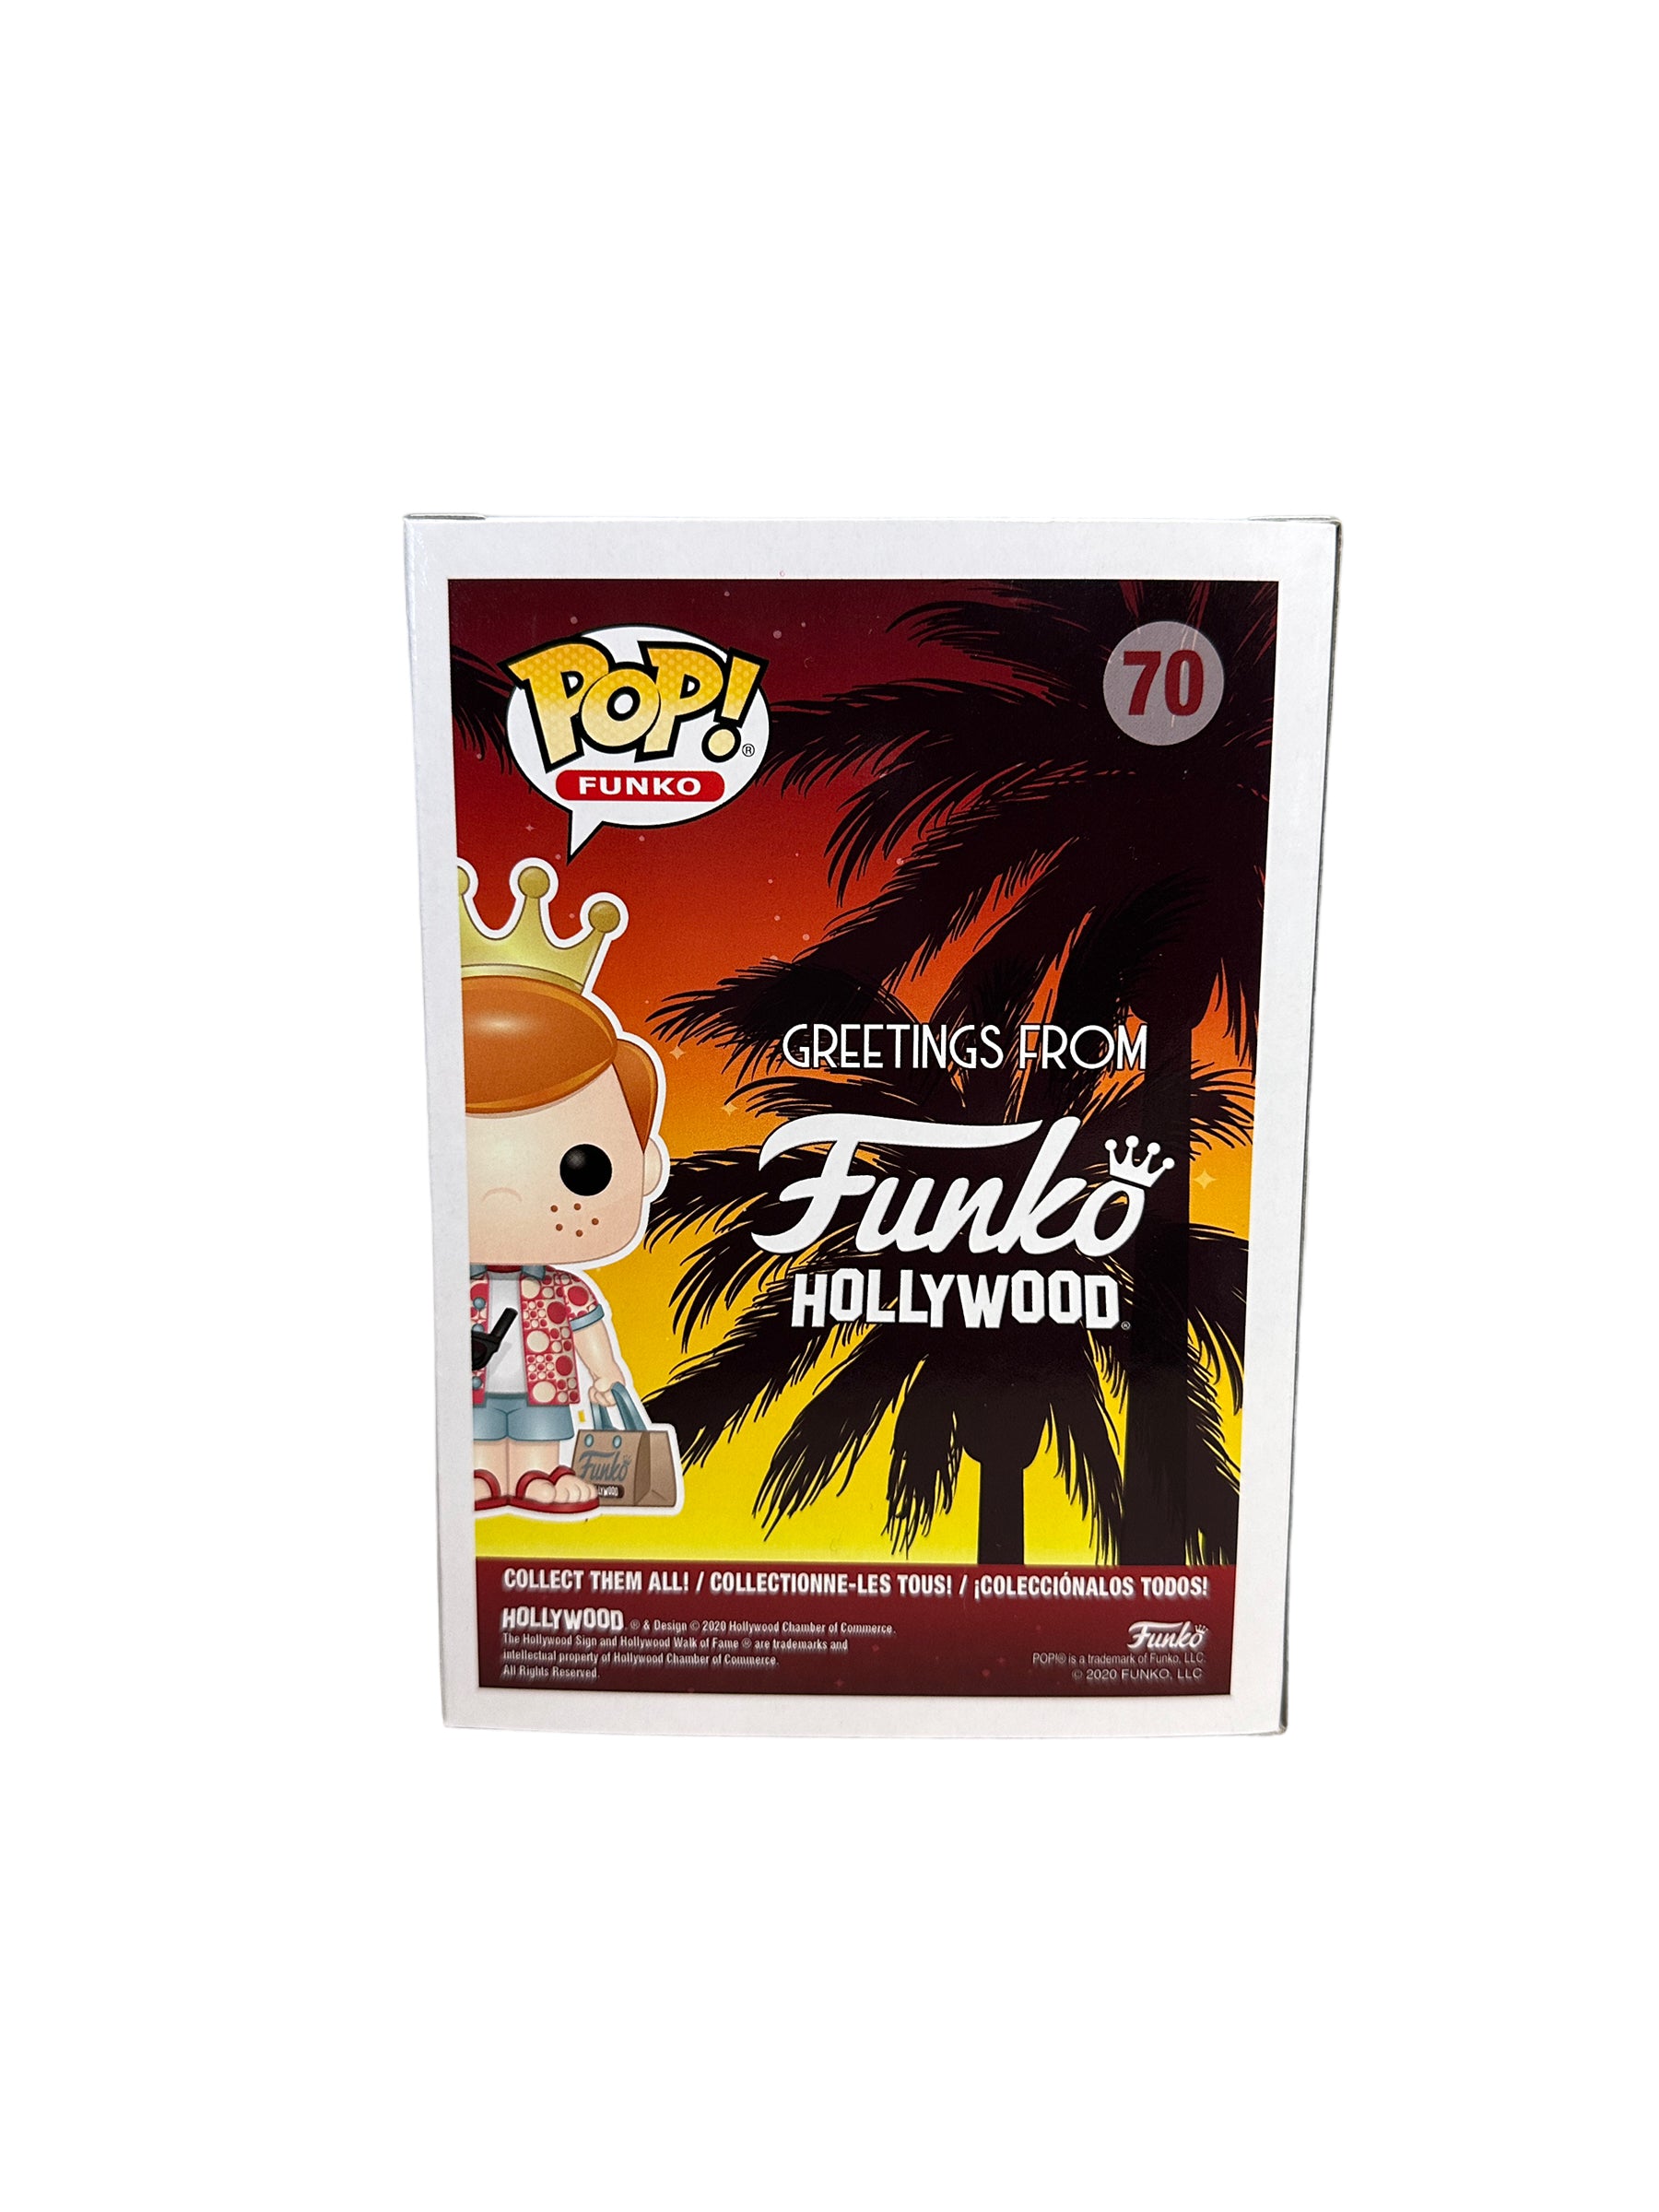 Tourist Freddy #70 Funko Pop! - Funko Hollywood Exclusive - Condition 9.5/10